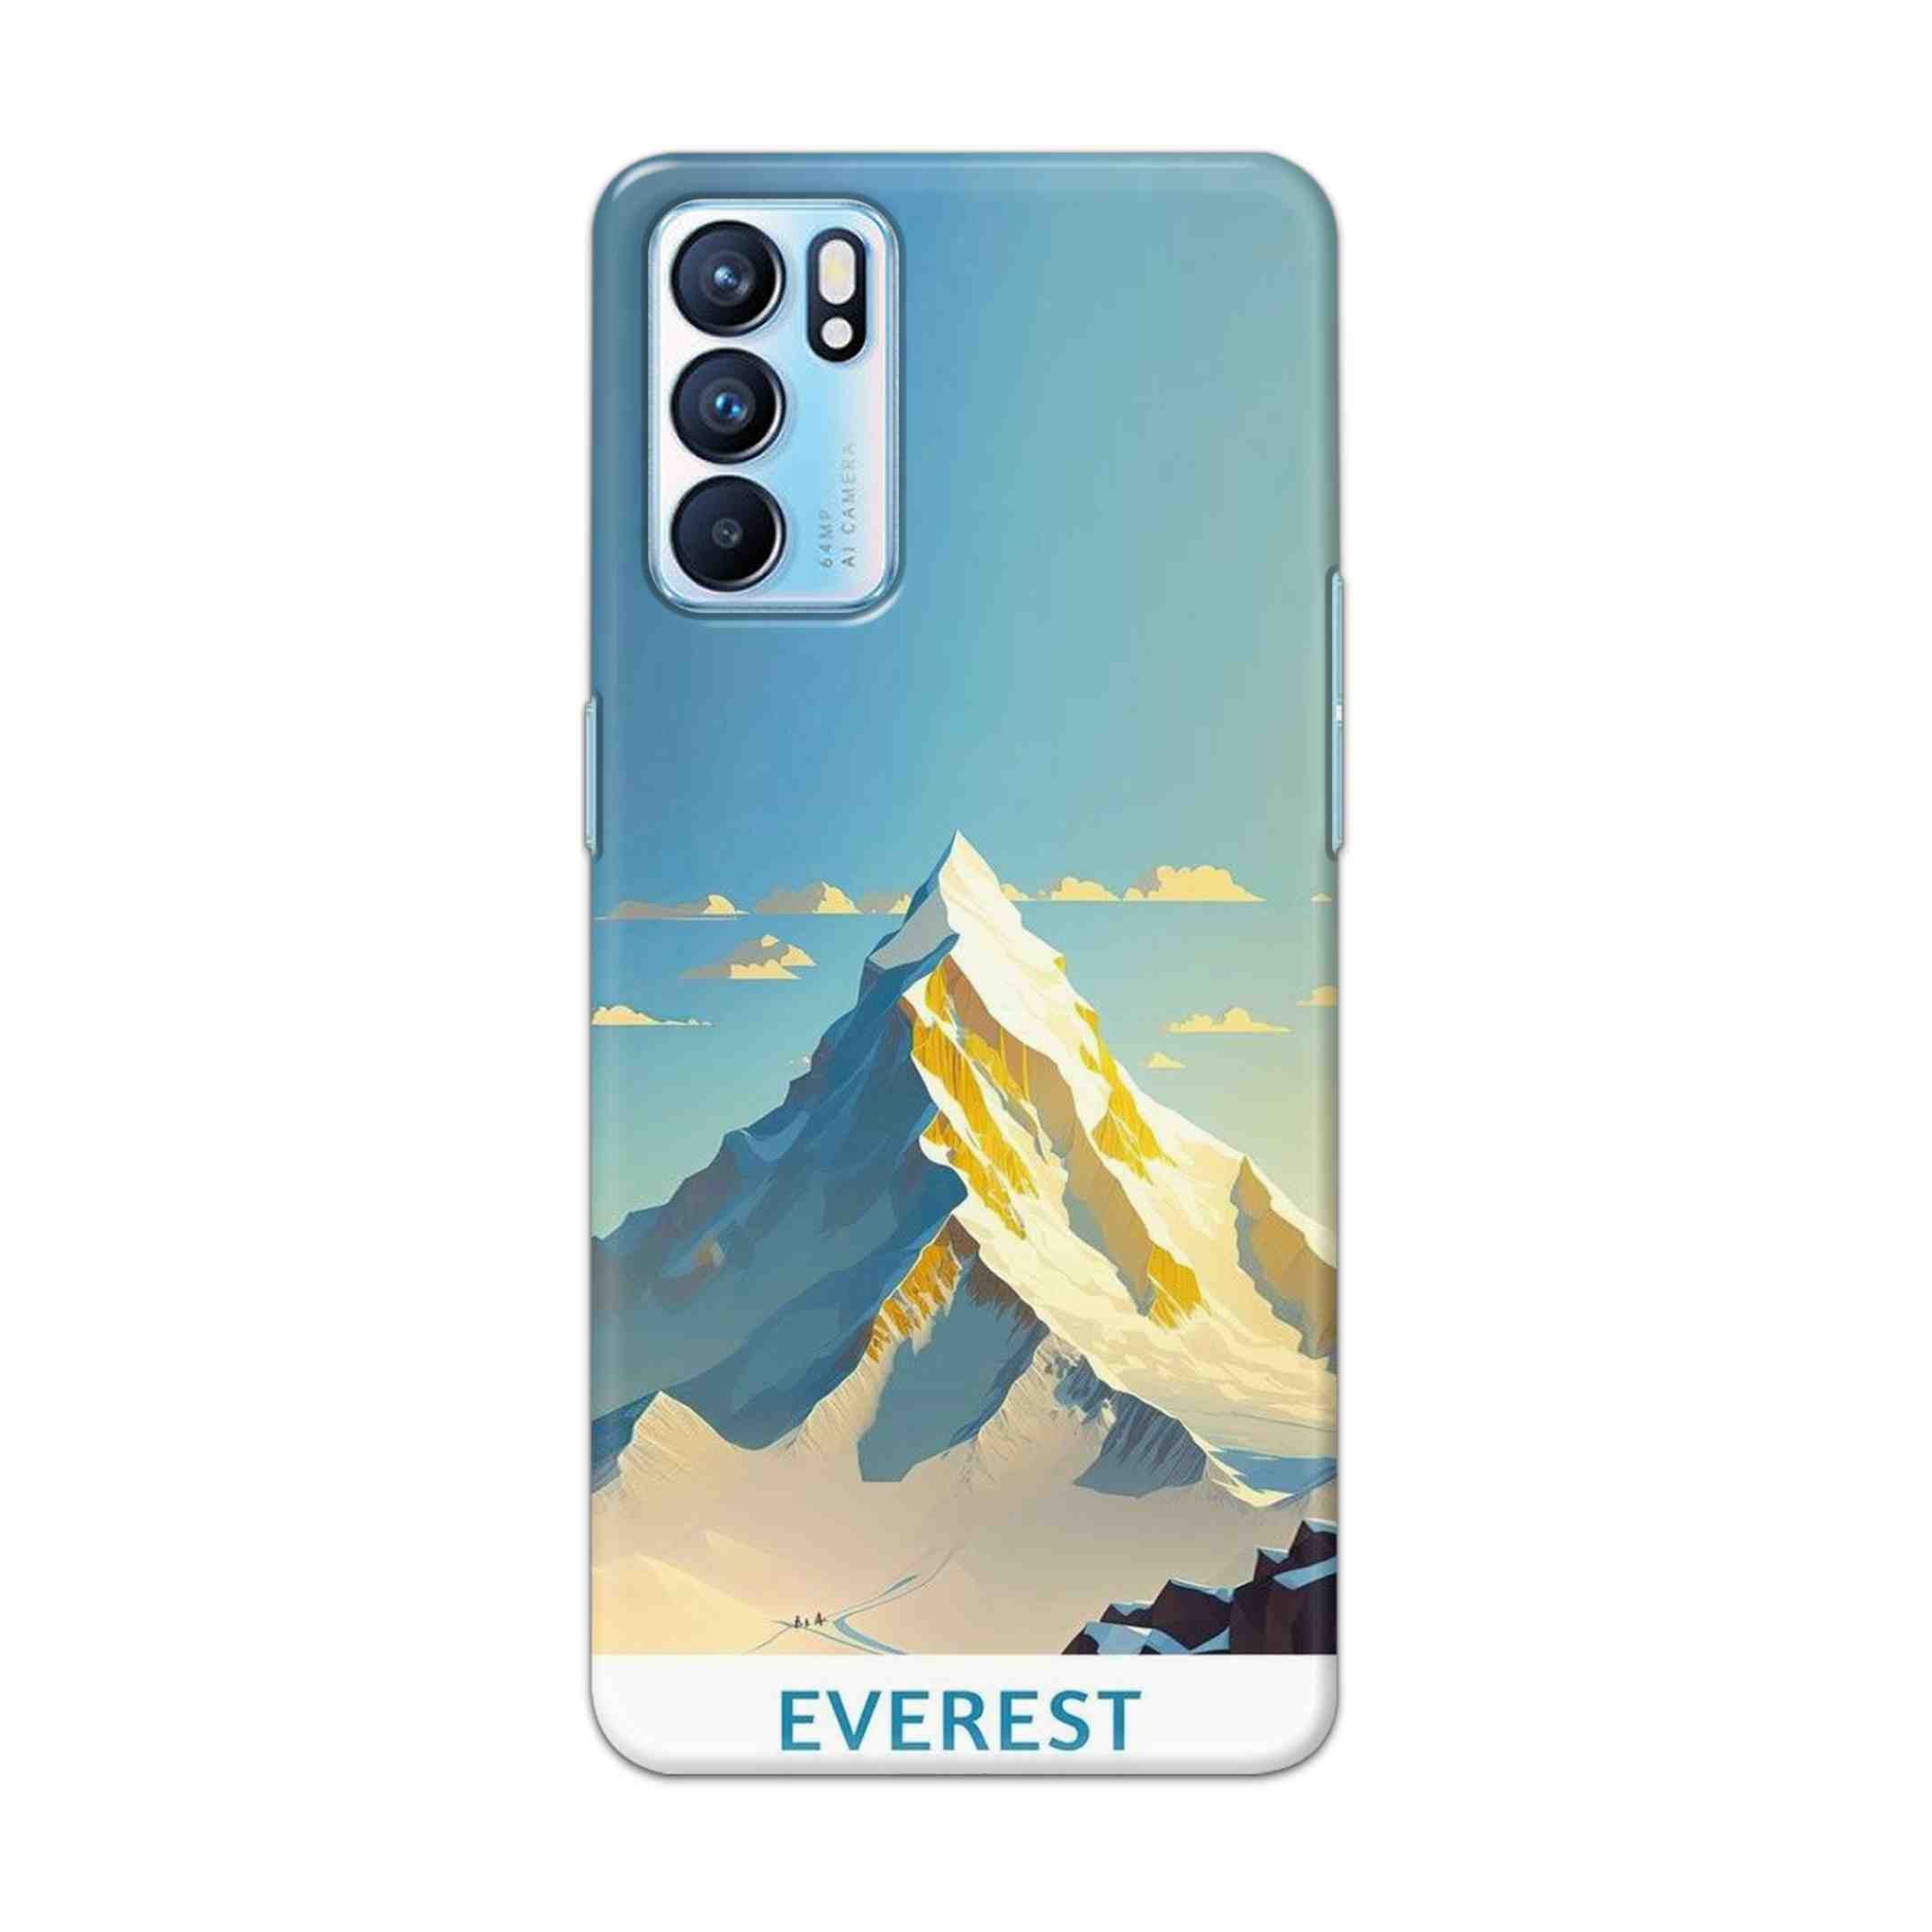 Buy Everest Hard Back Mobile Phone Case Cover For OPPO RENO 6 Online